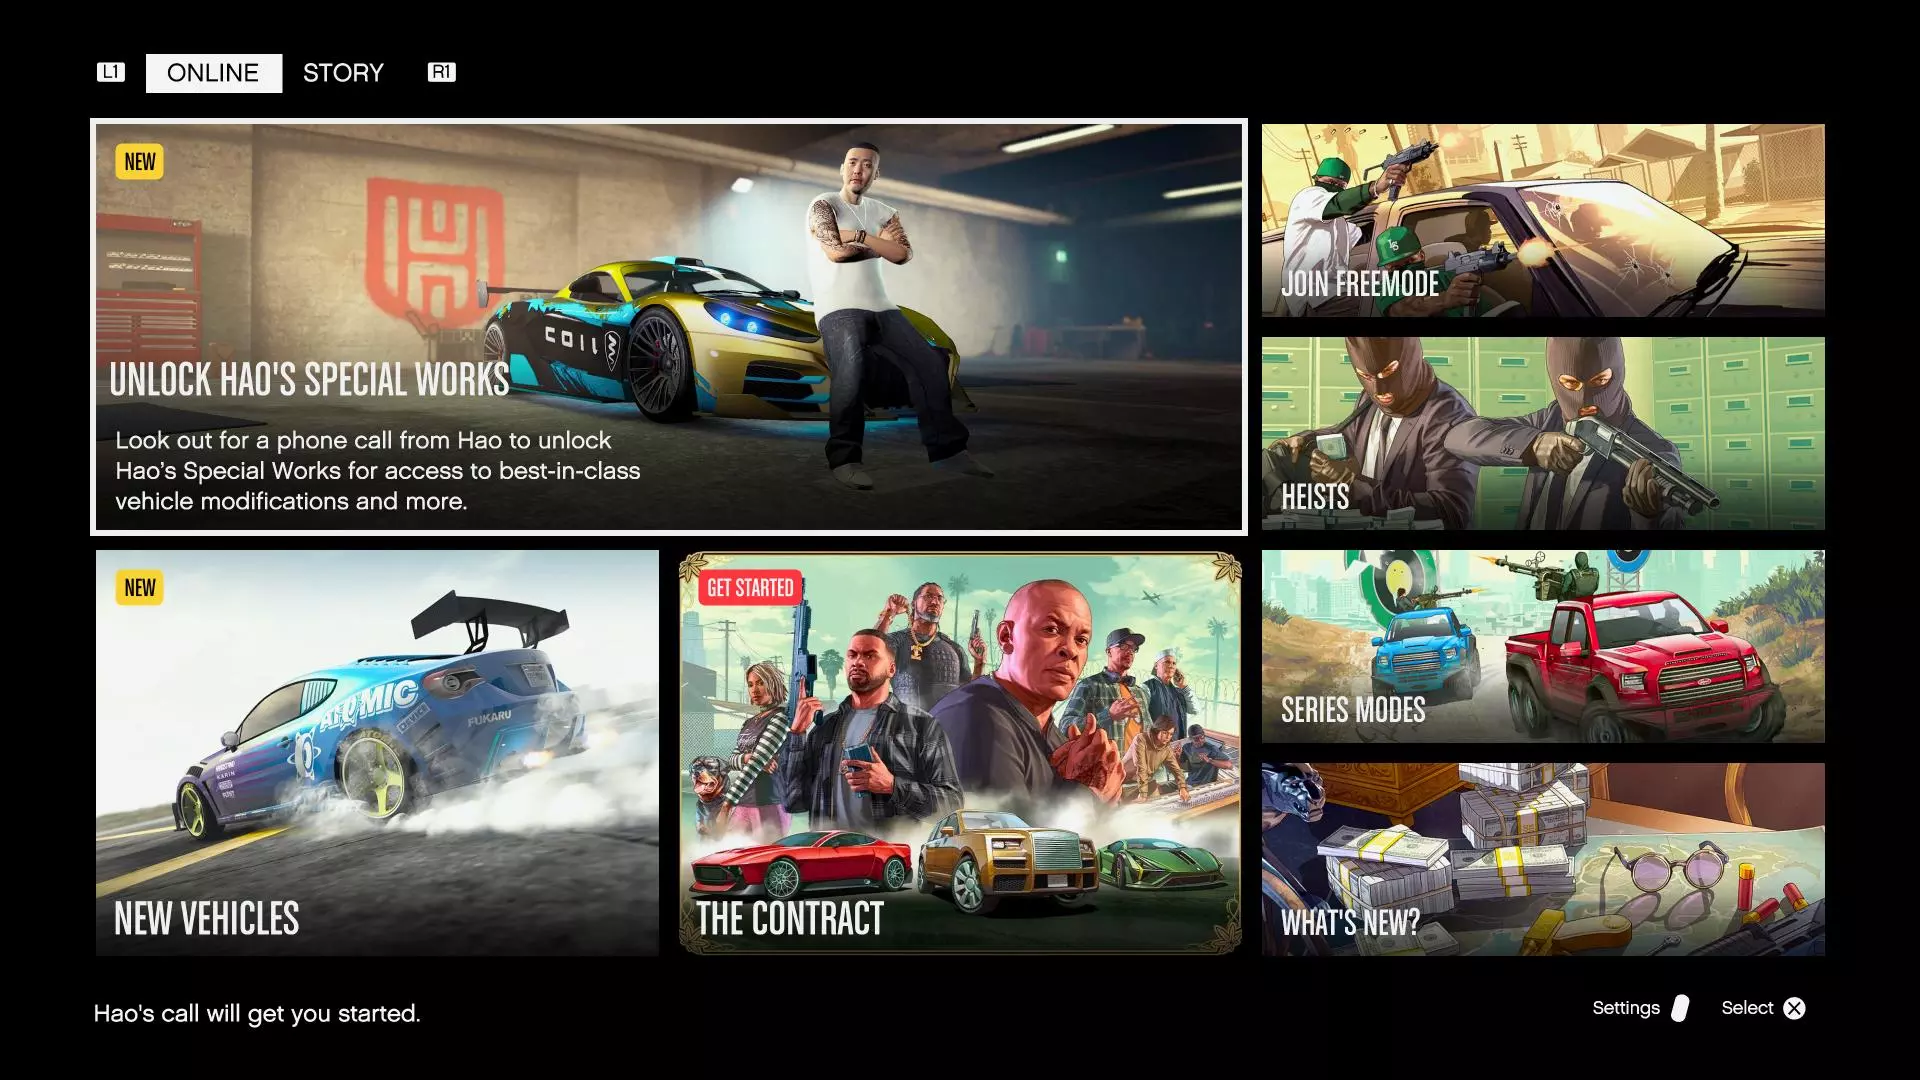 GTA Online: Los Santos Tuners Update Now Live, Xbox Series X, S Version To  Receive Exclusive Vehicle Upgrades